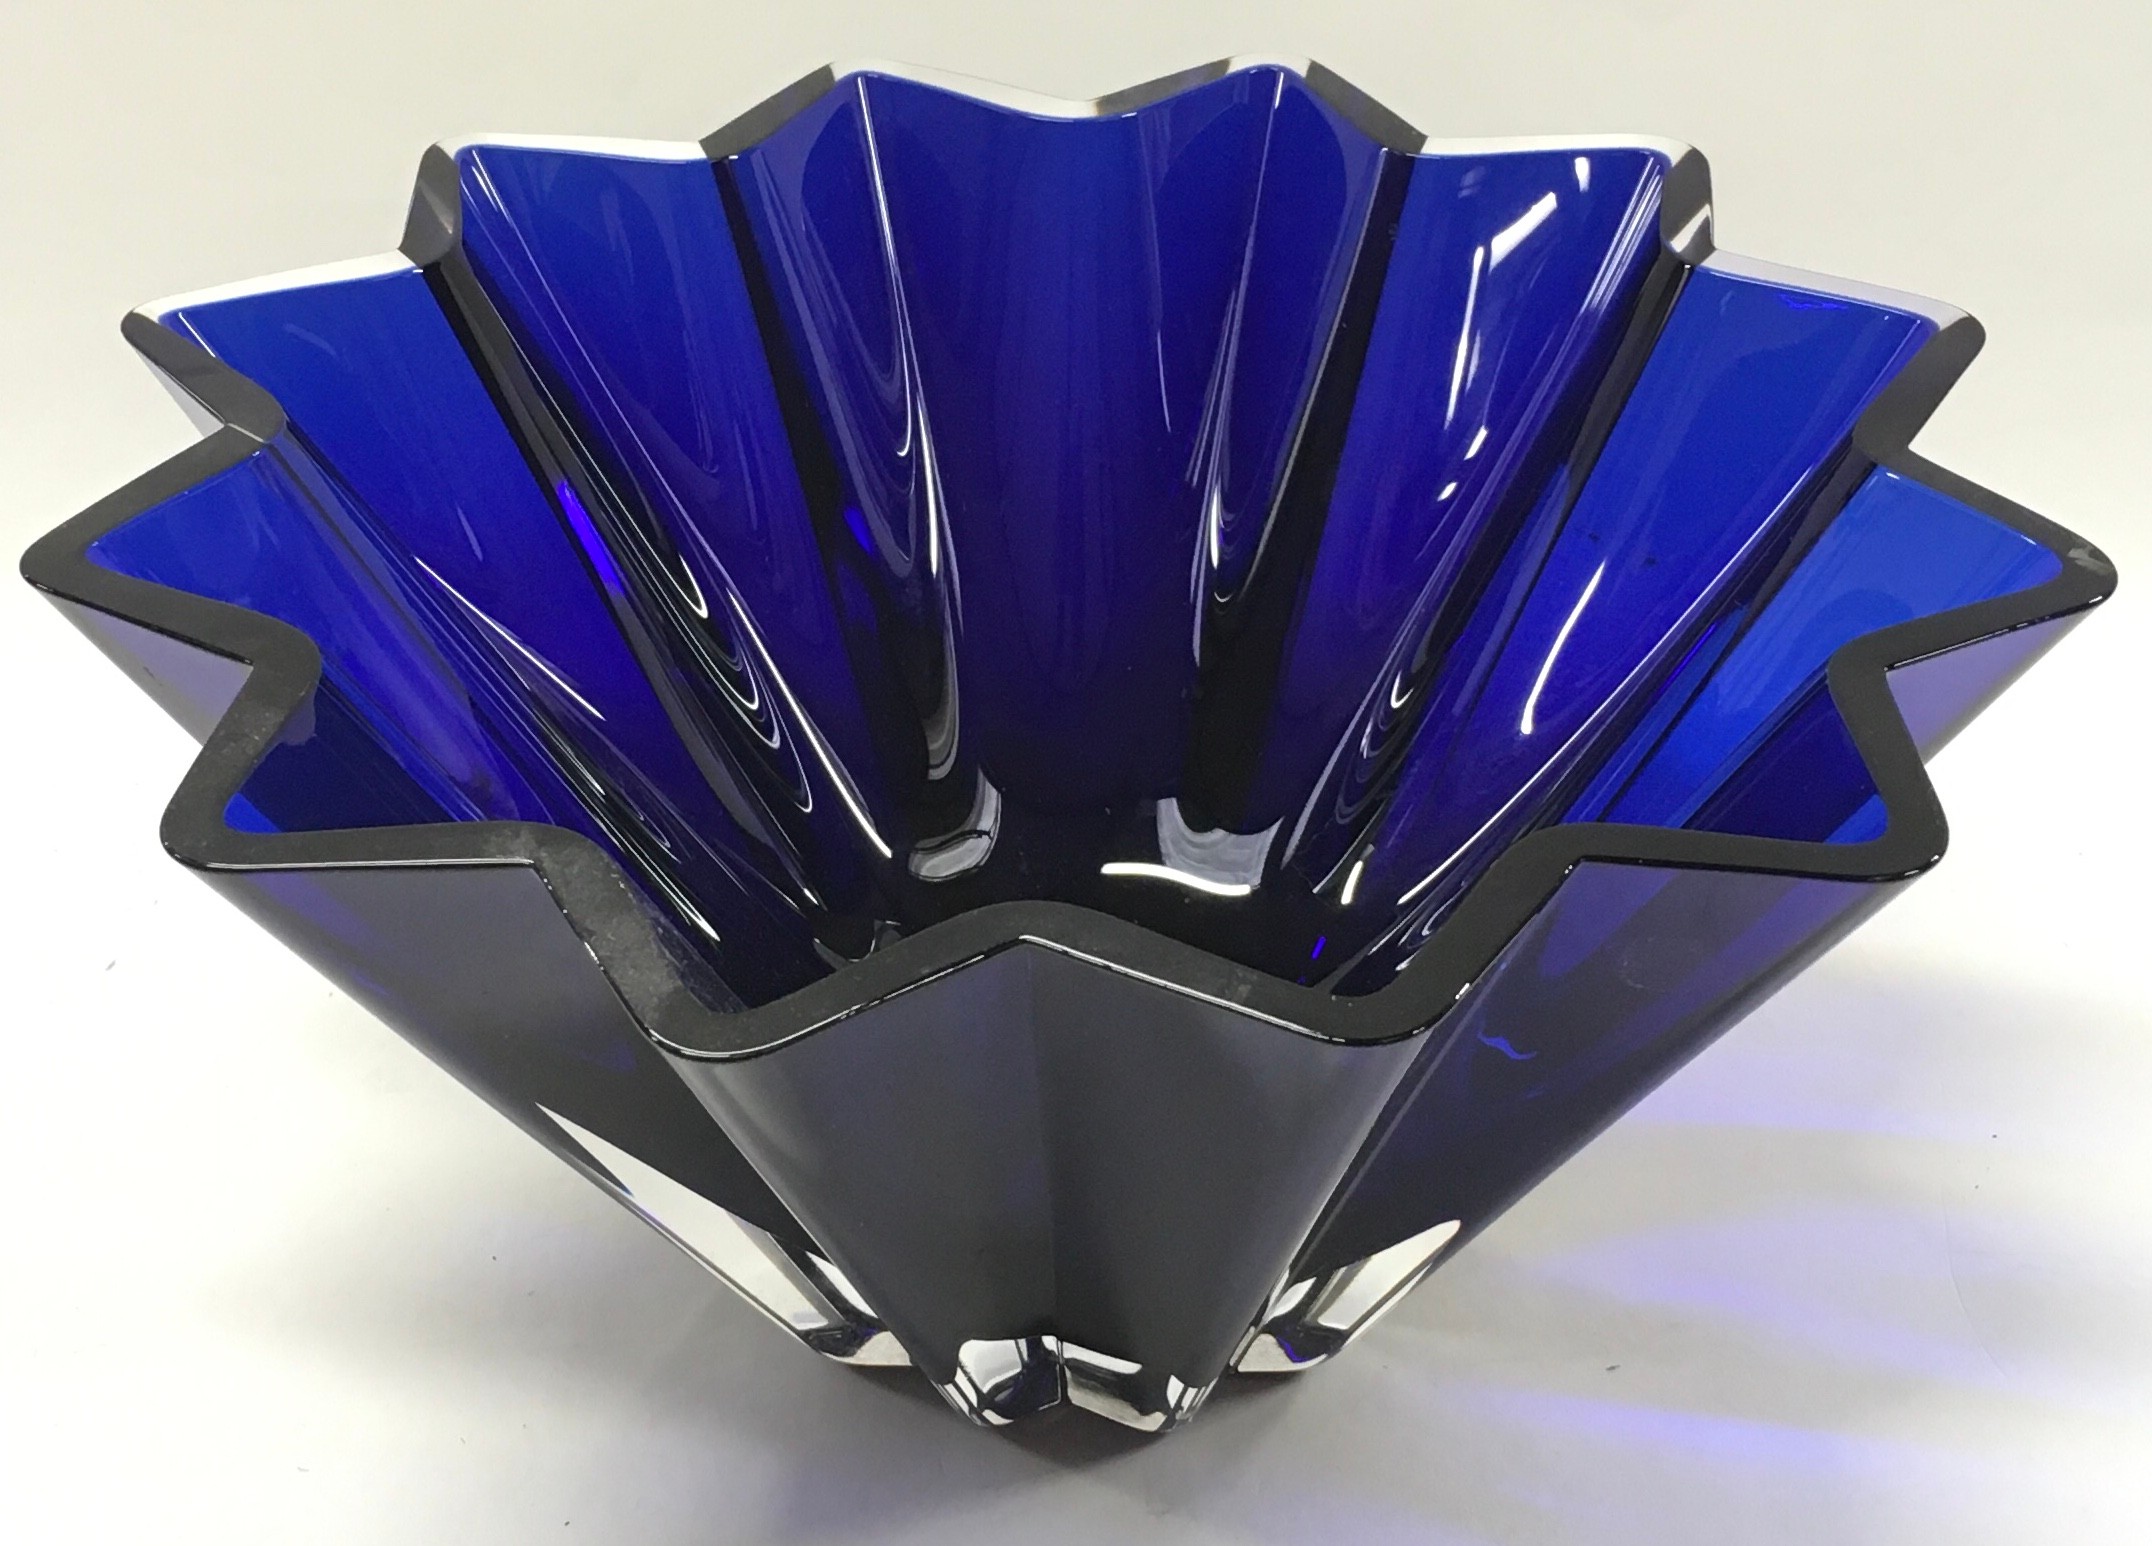 Dartington cobalt blue ribbed/pleated hand blown glass bowl diameter 31cm at widest point.